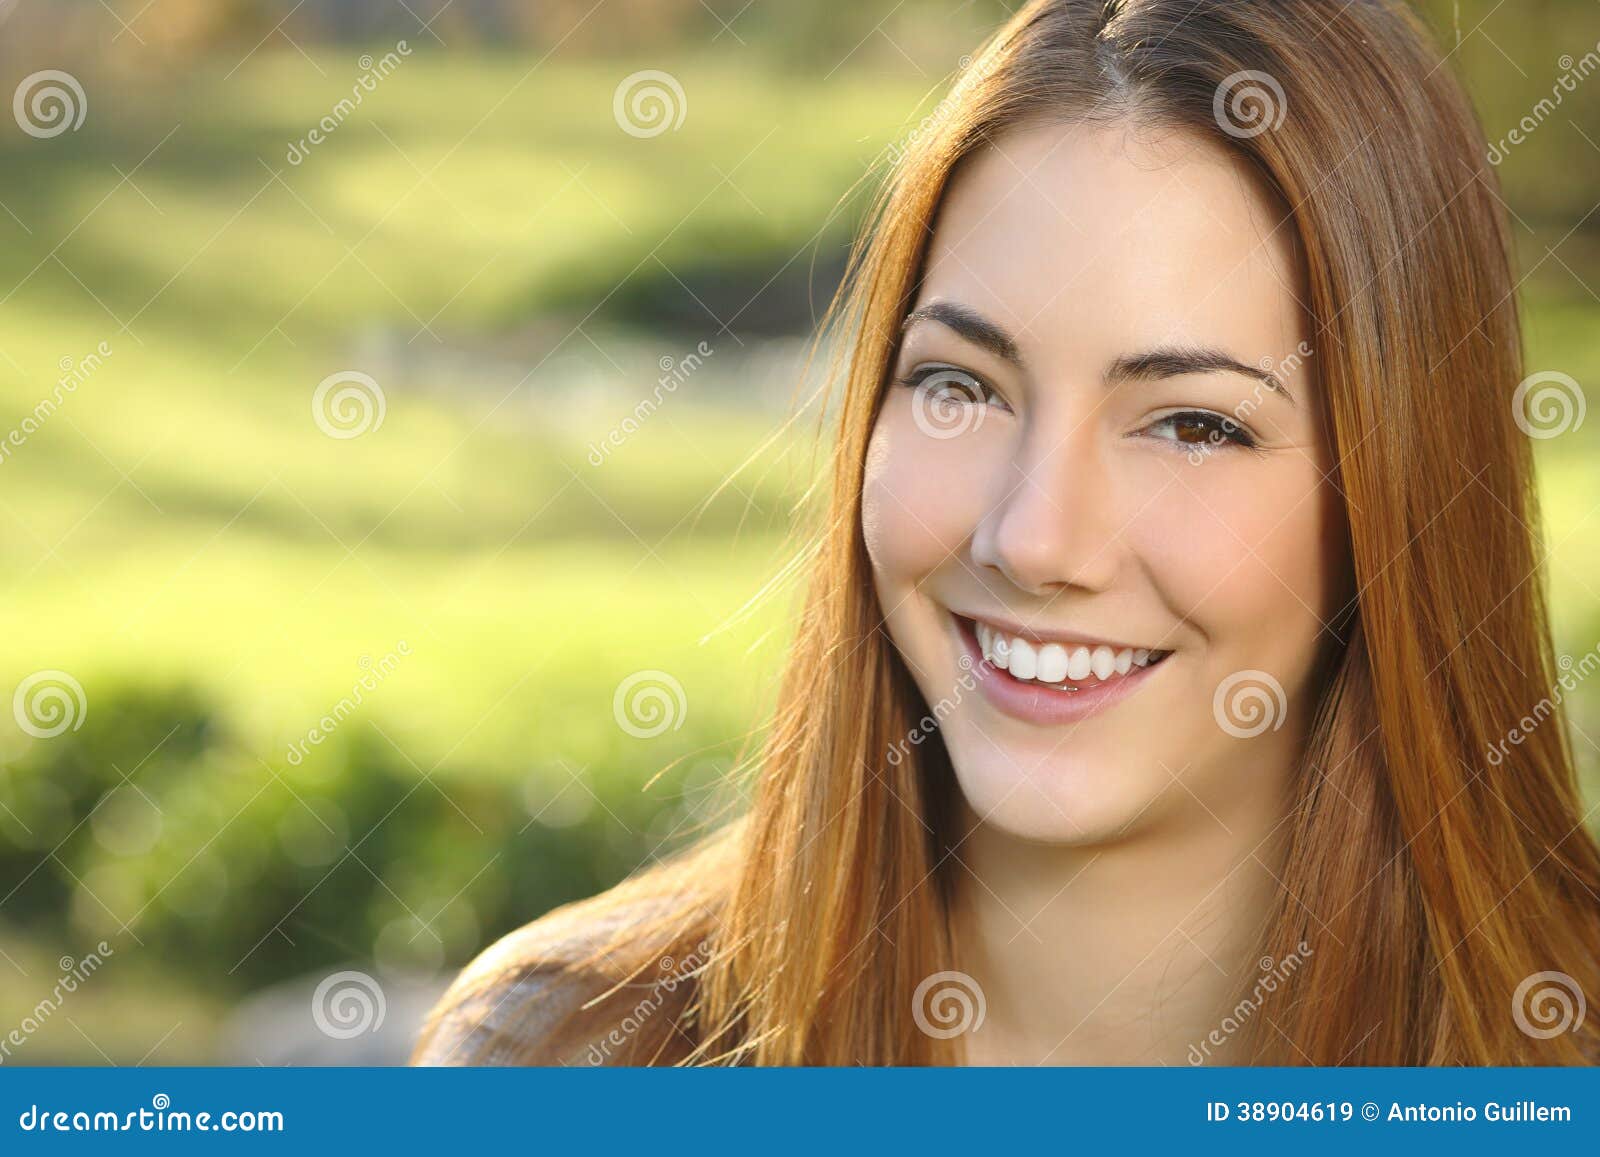 portrait of a woman white smile dental care